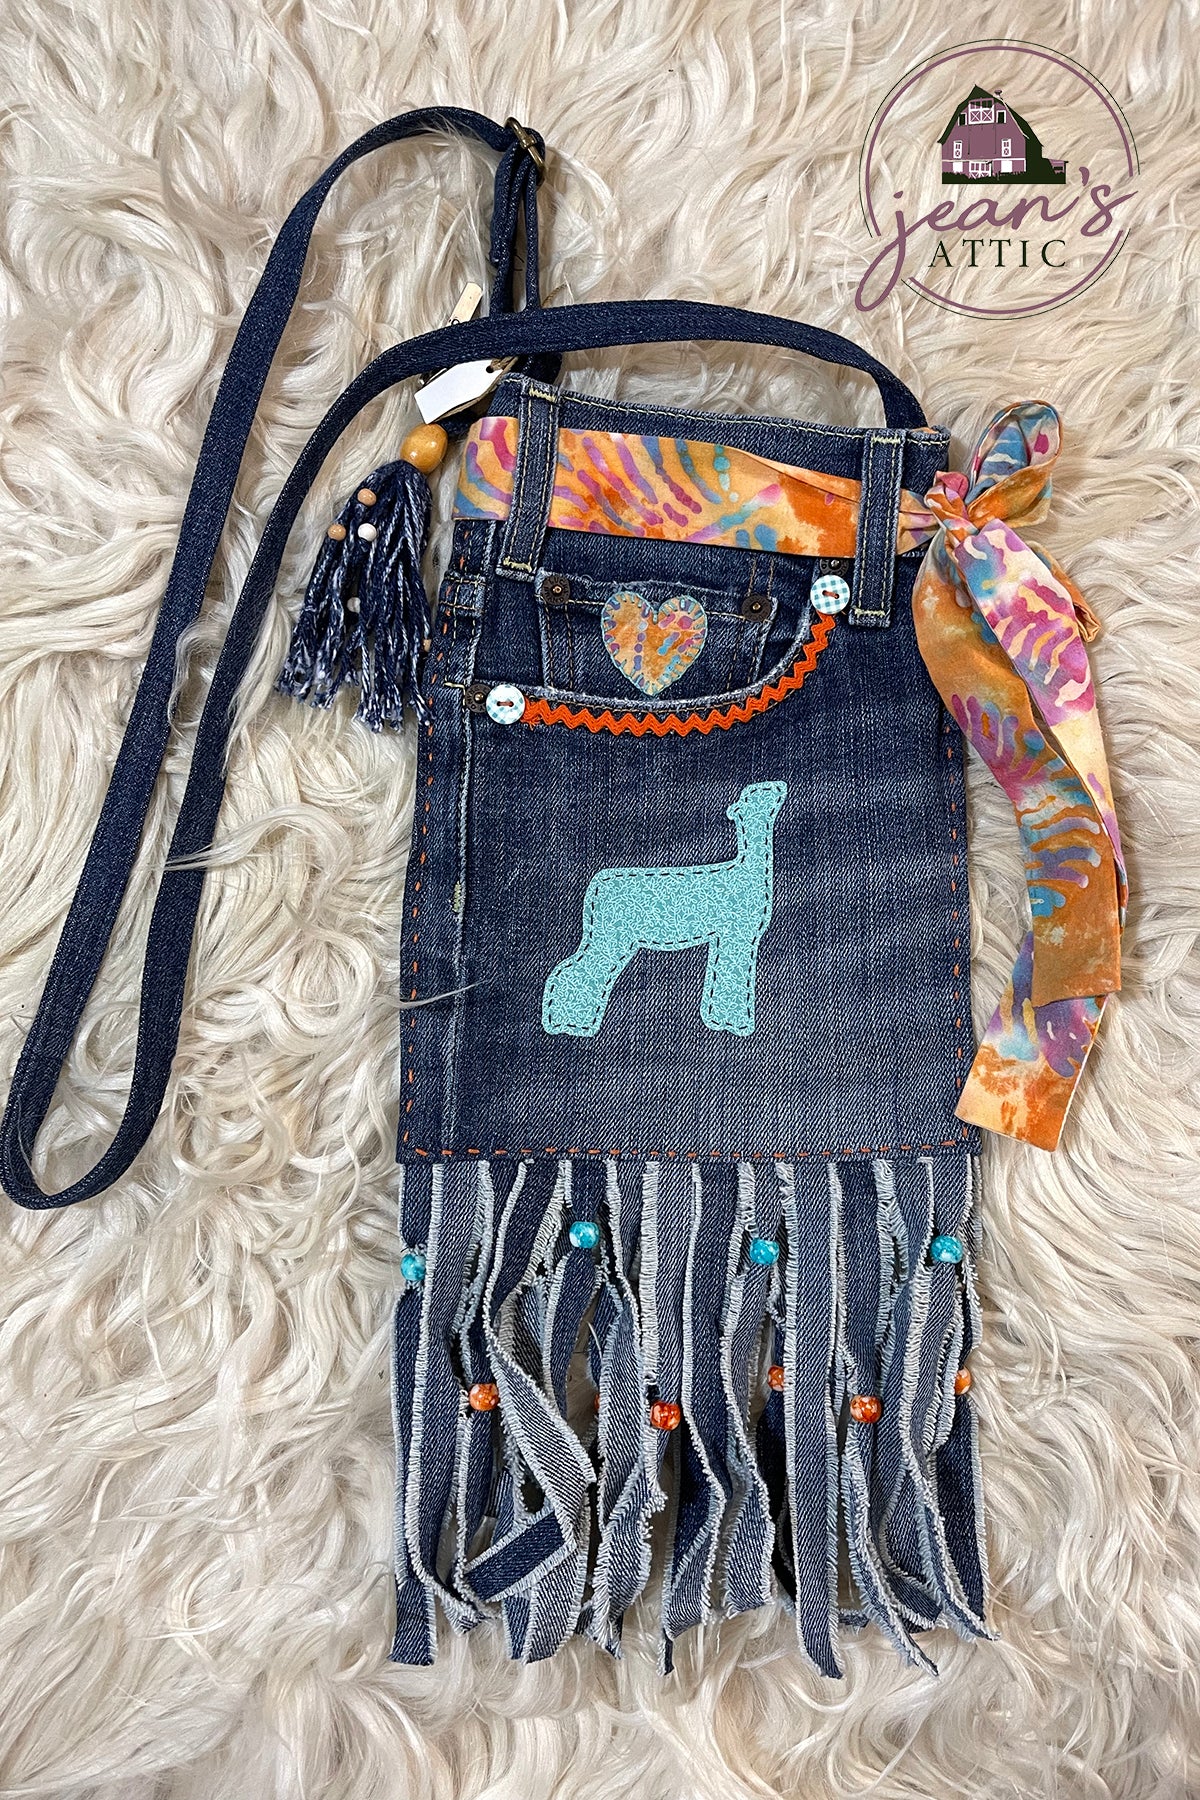 Ykk Woman's Purse and Blue jean Bag | eBay